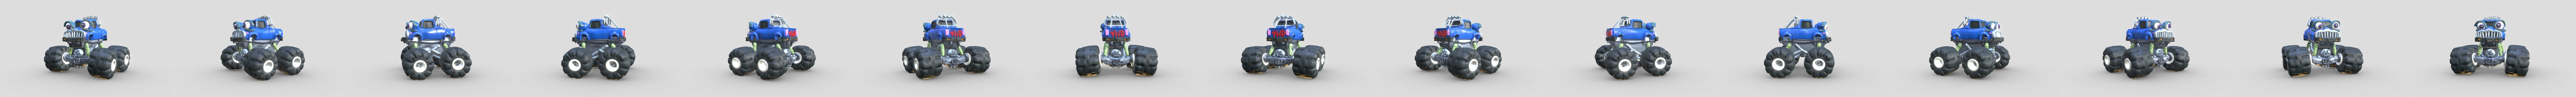 Stunt Race FX 4WD Truck render